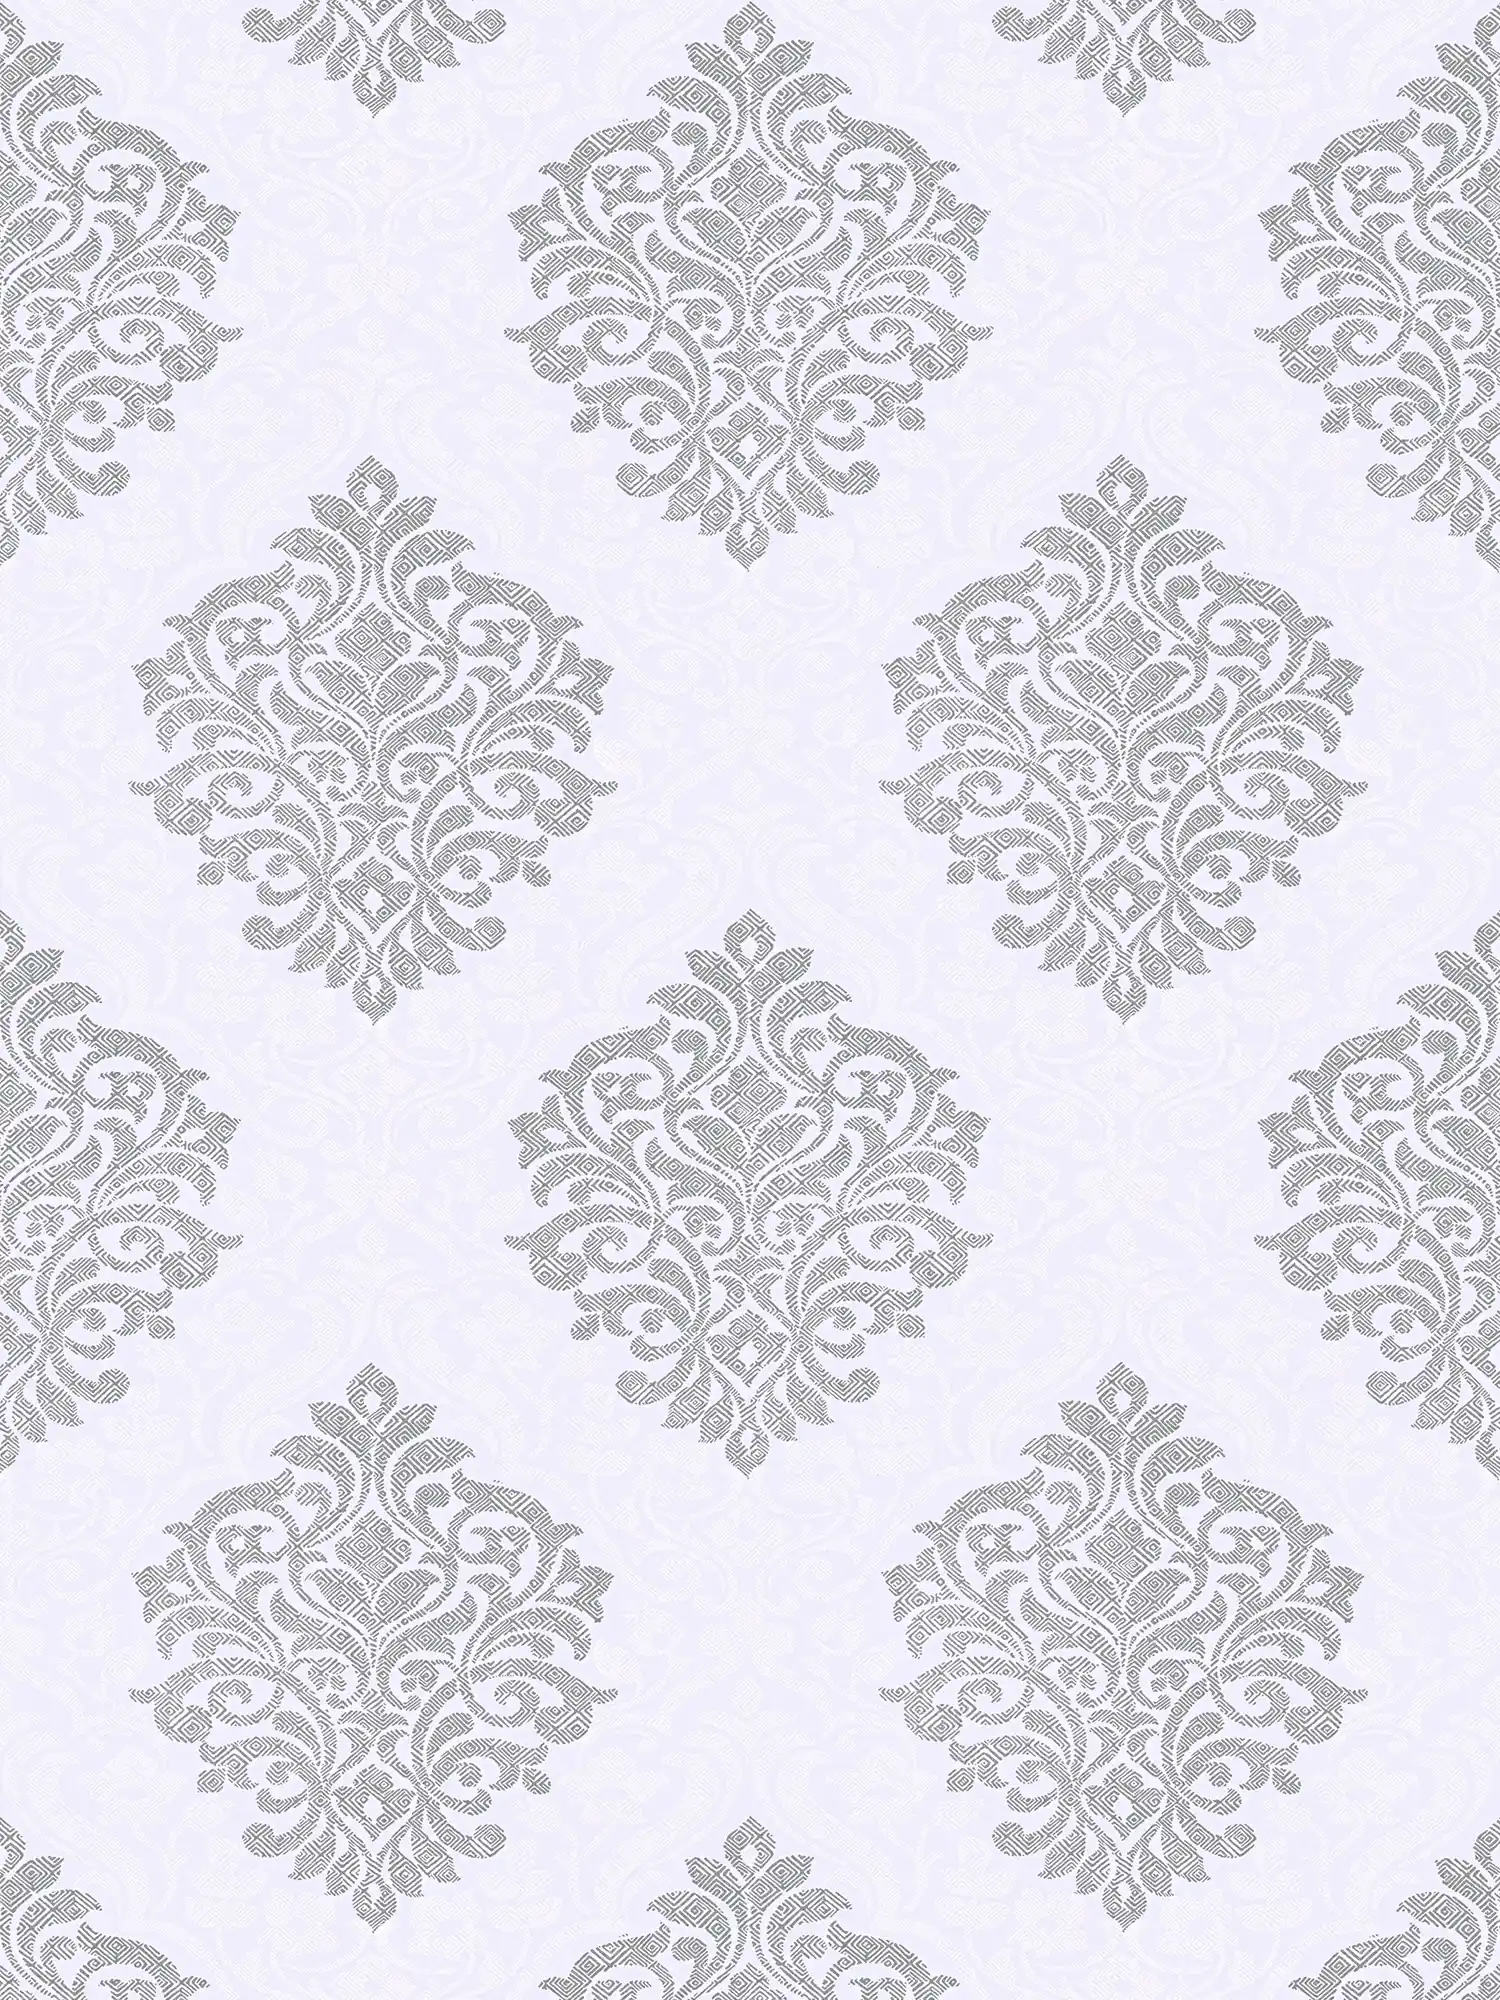 Floral ornamental wallpaper diamond pattern in ethnic style - grey, white, silver
